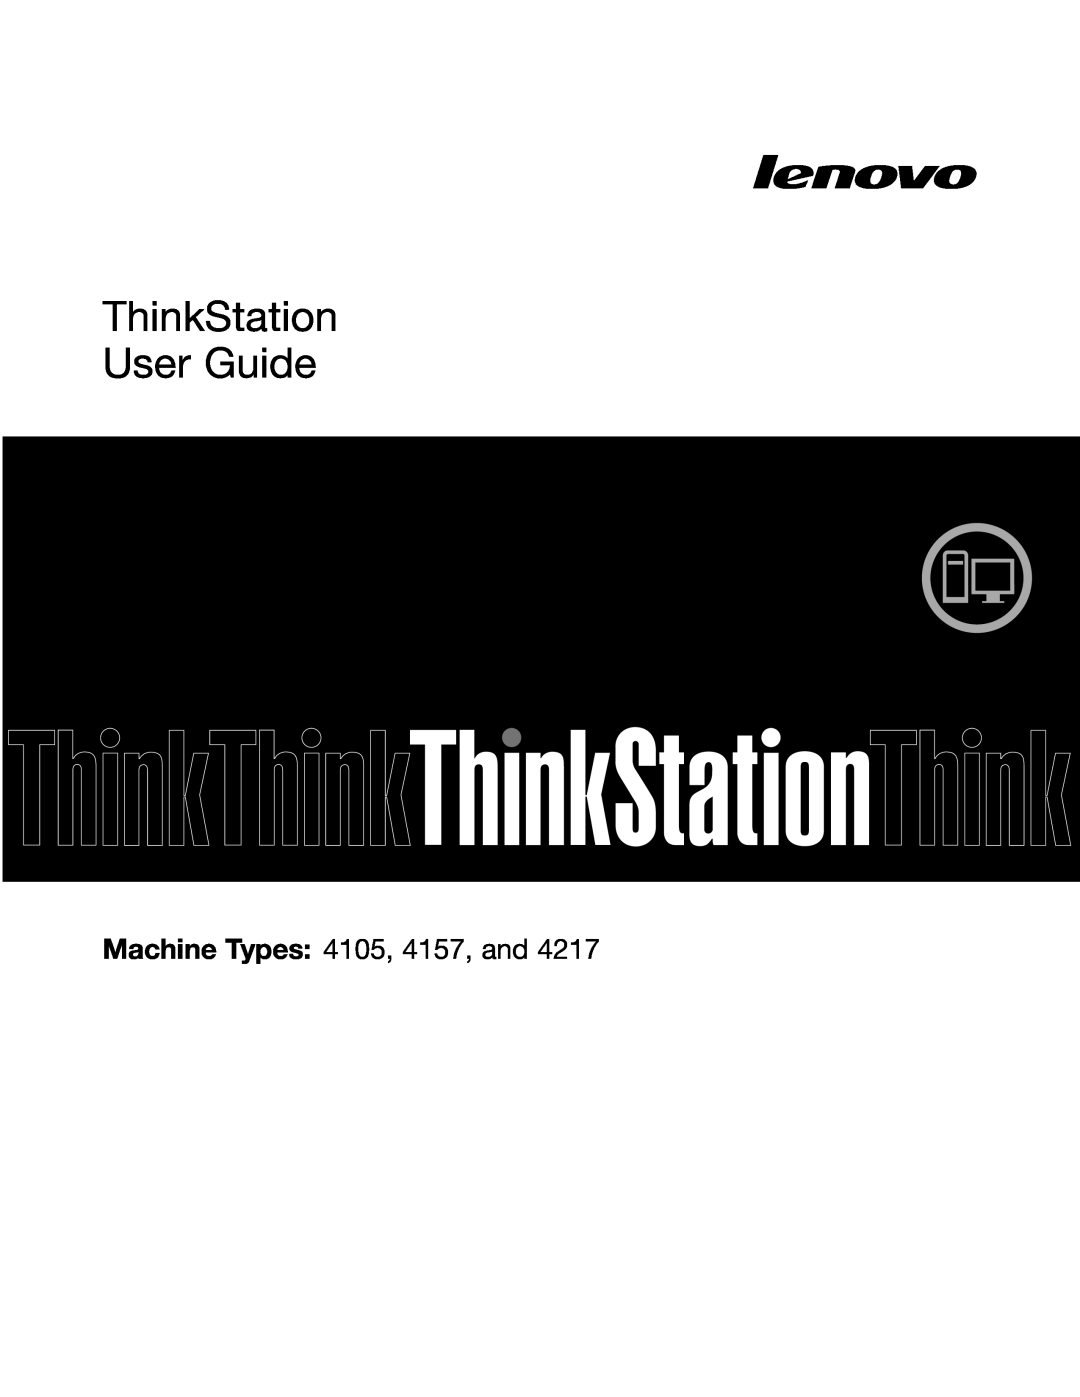 Lenovo 4157VJU, 4217 manual ThinkStation User Guide, Machine Types 4105, 4157, and 